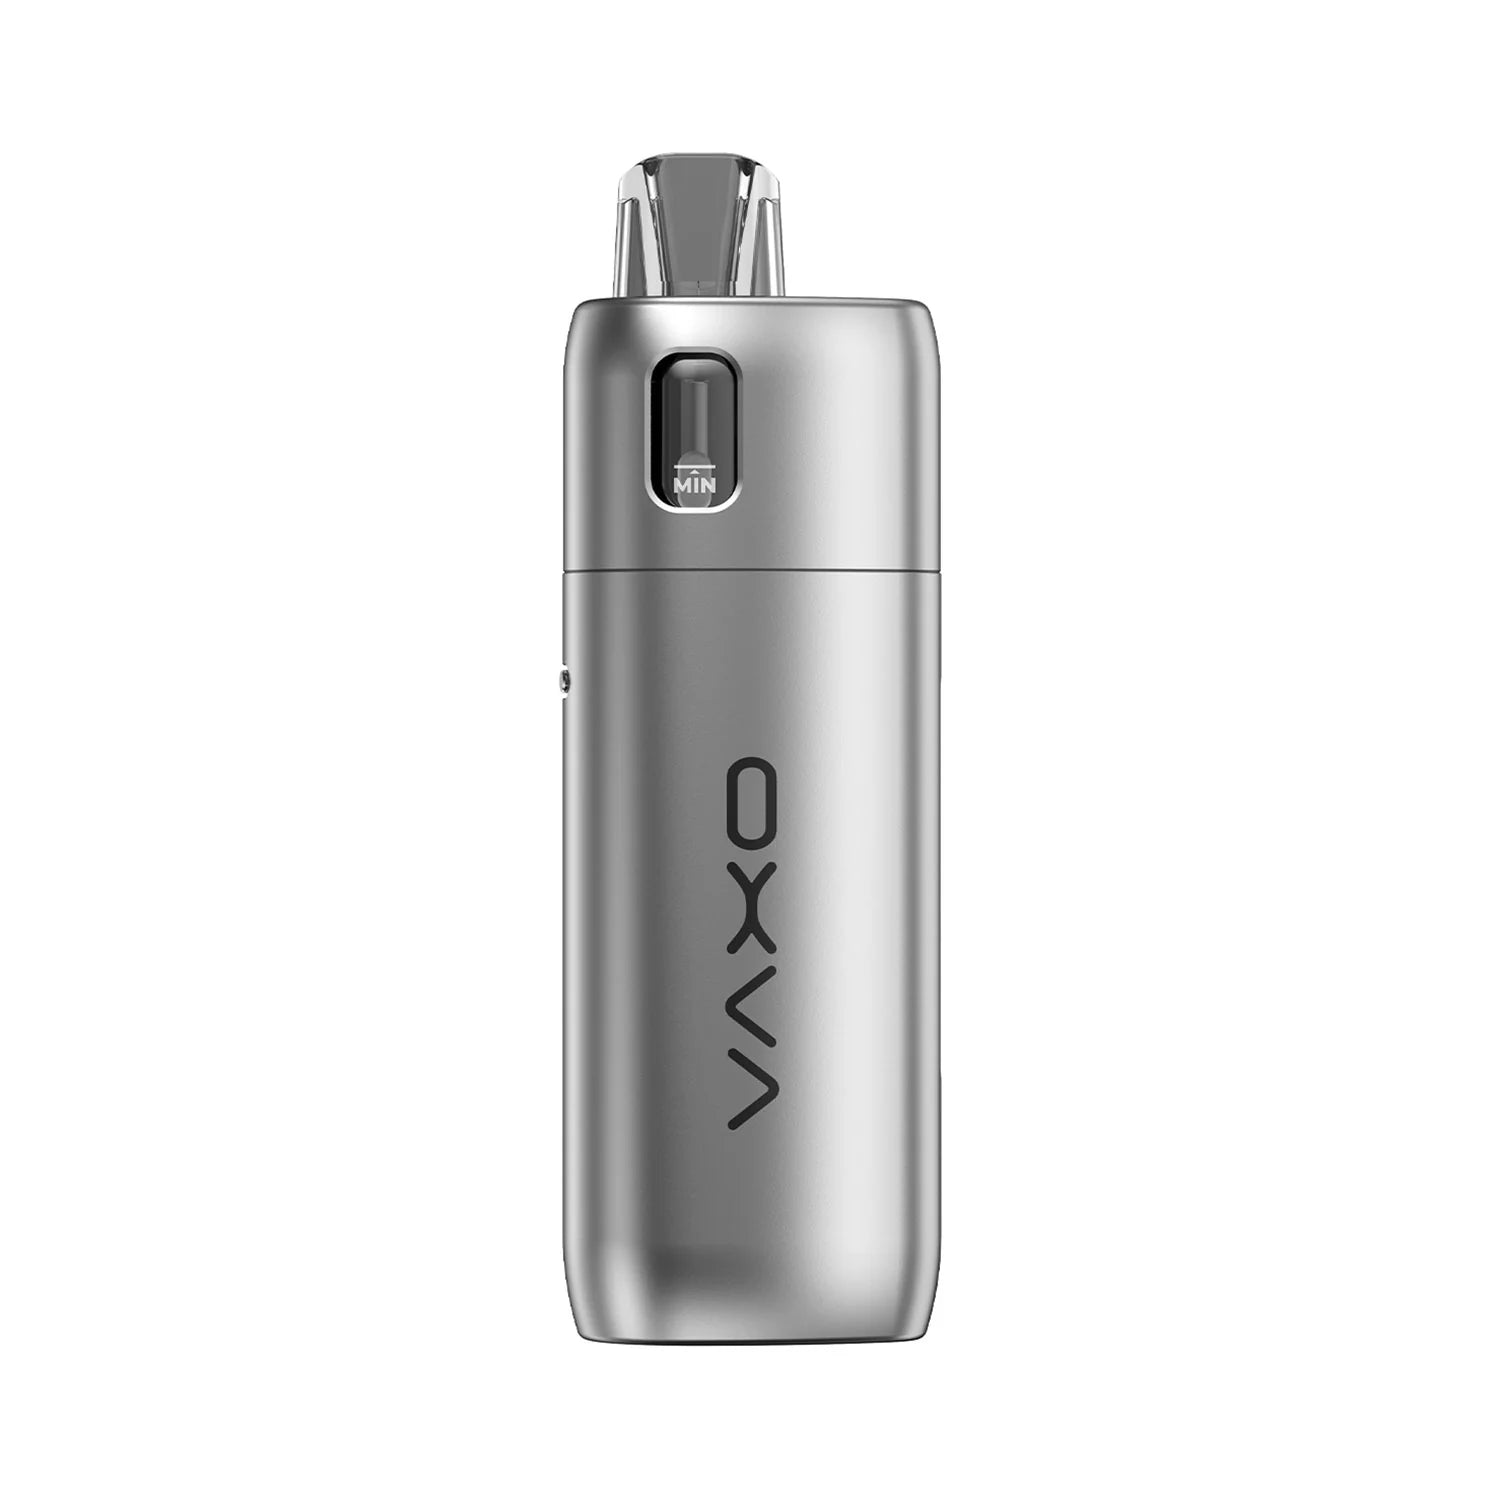 Oxva Oneo Pod Mod Kit Cool Silver